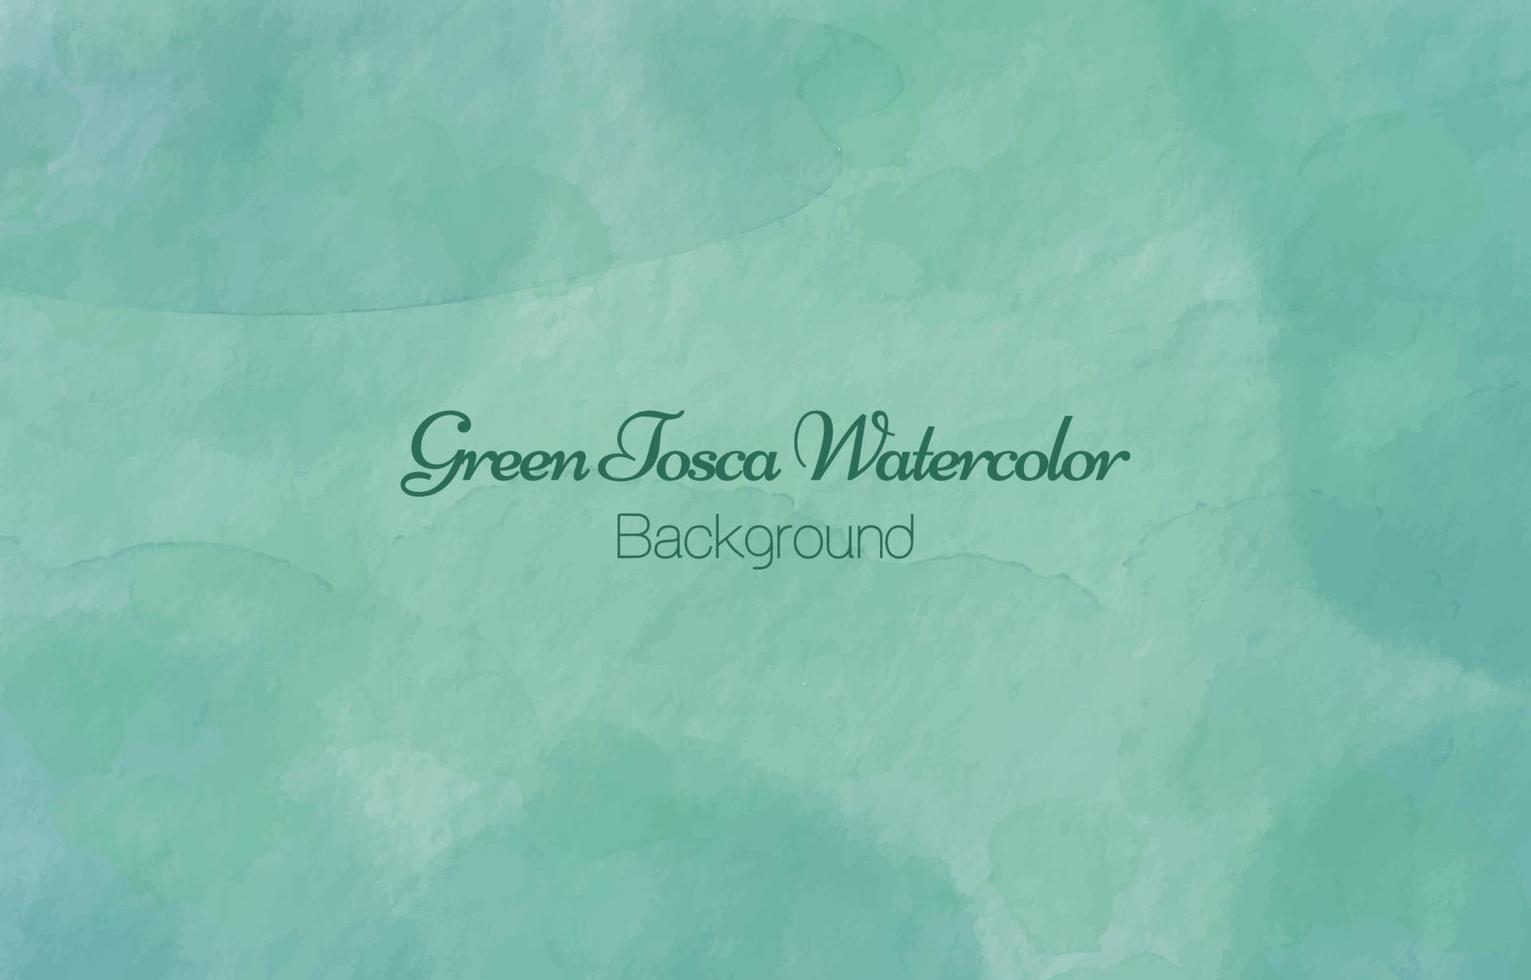 Green Tosca Watercolor Background vector